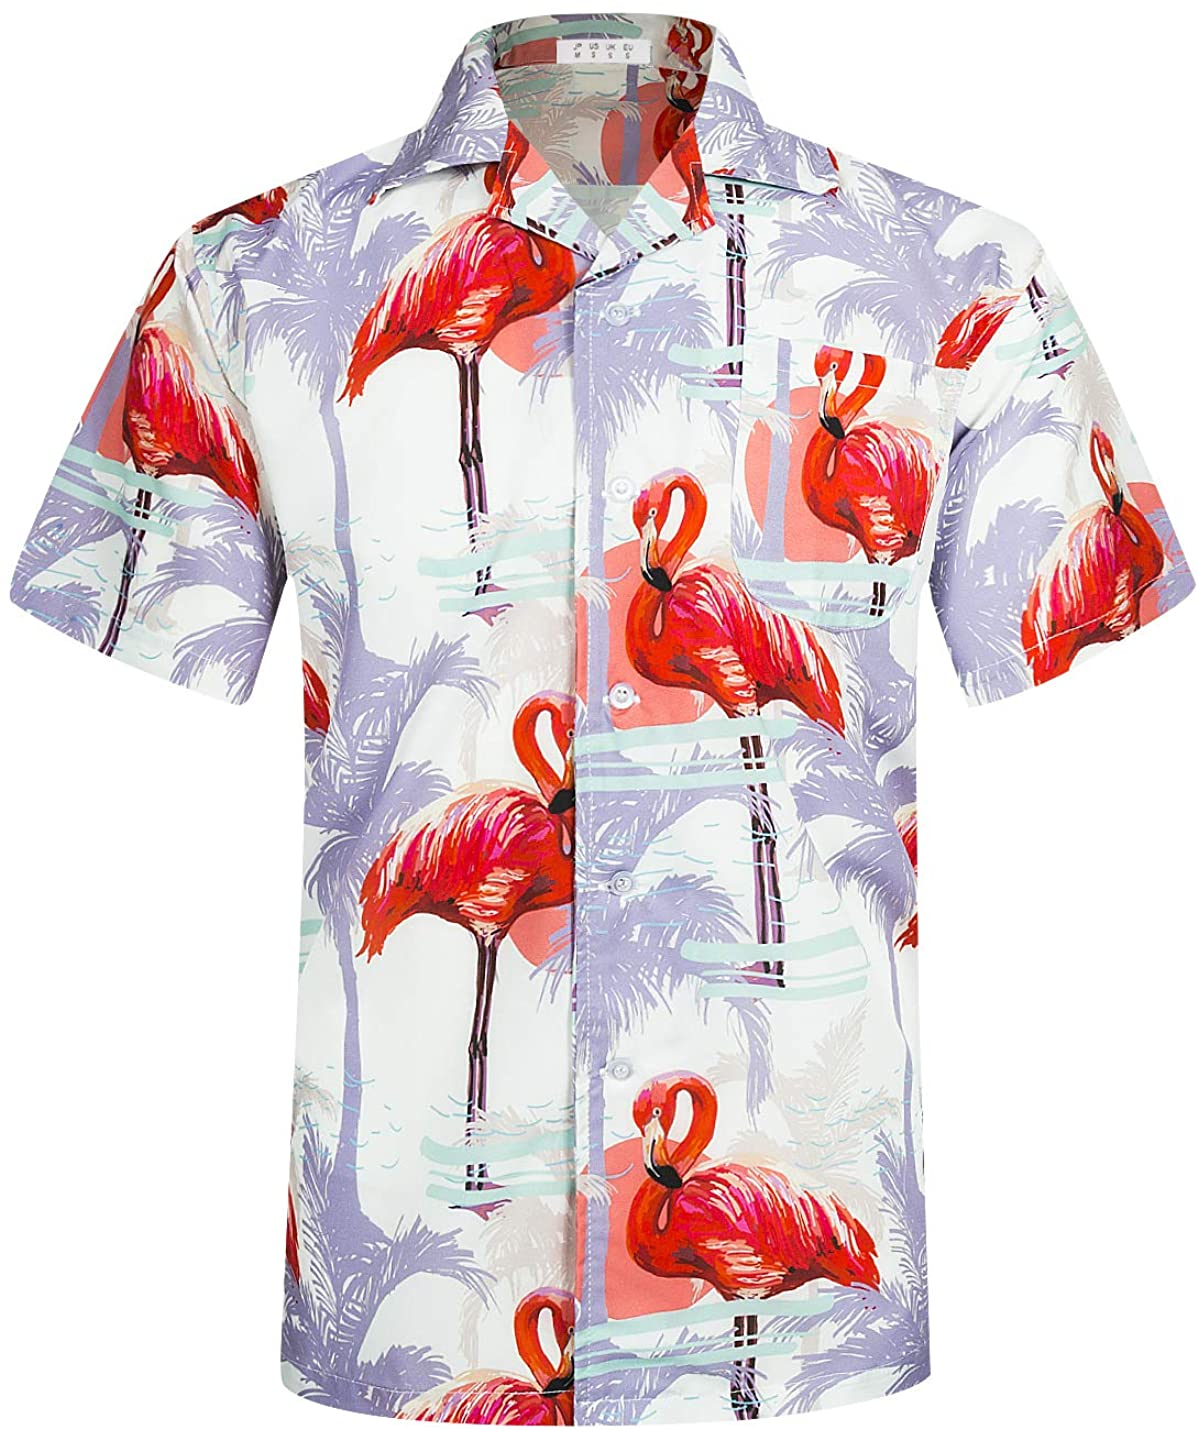 APTRO Men's 4 Way Stretch Hawaiian Shirt Tropical Beach Shirts 